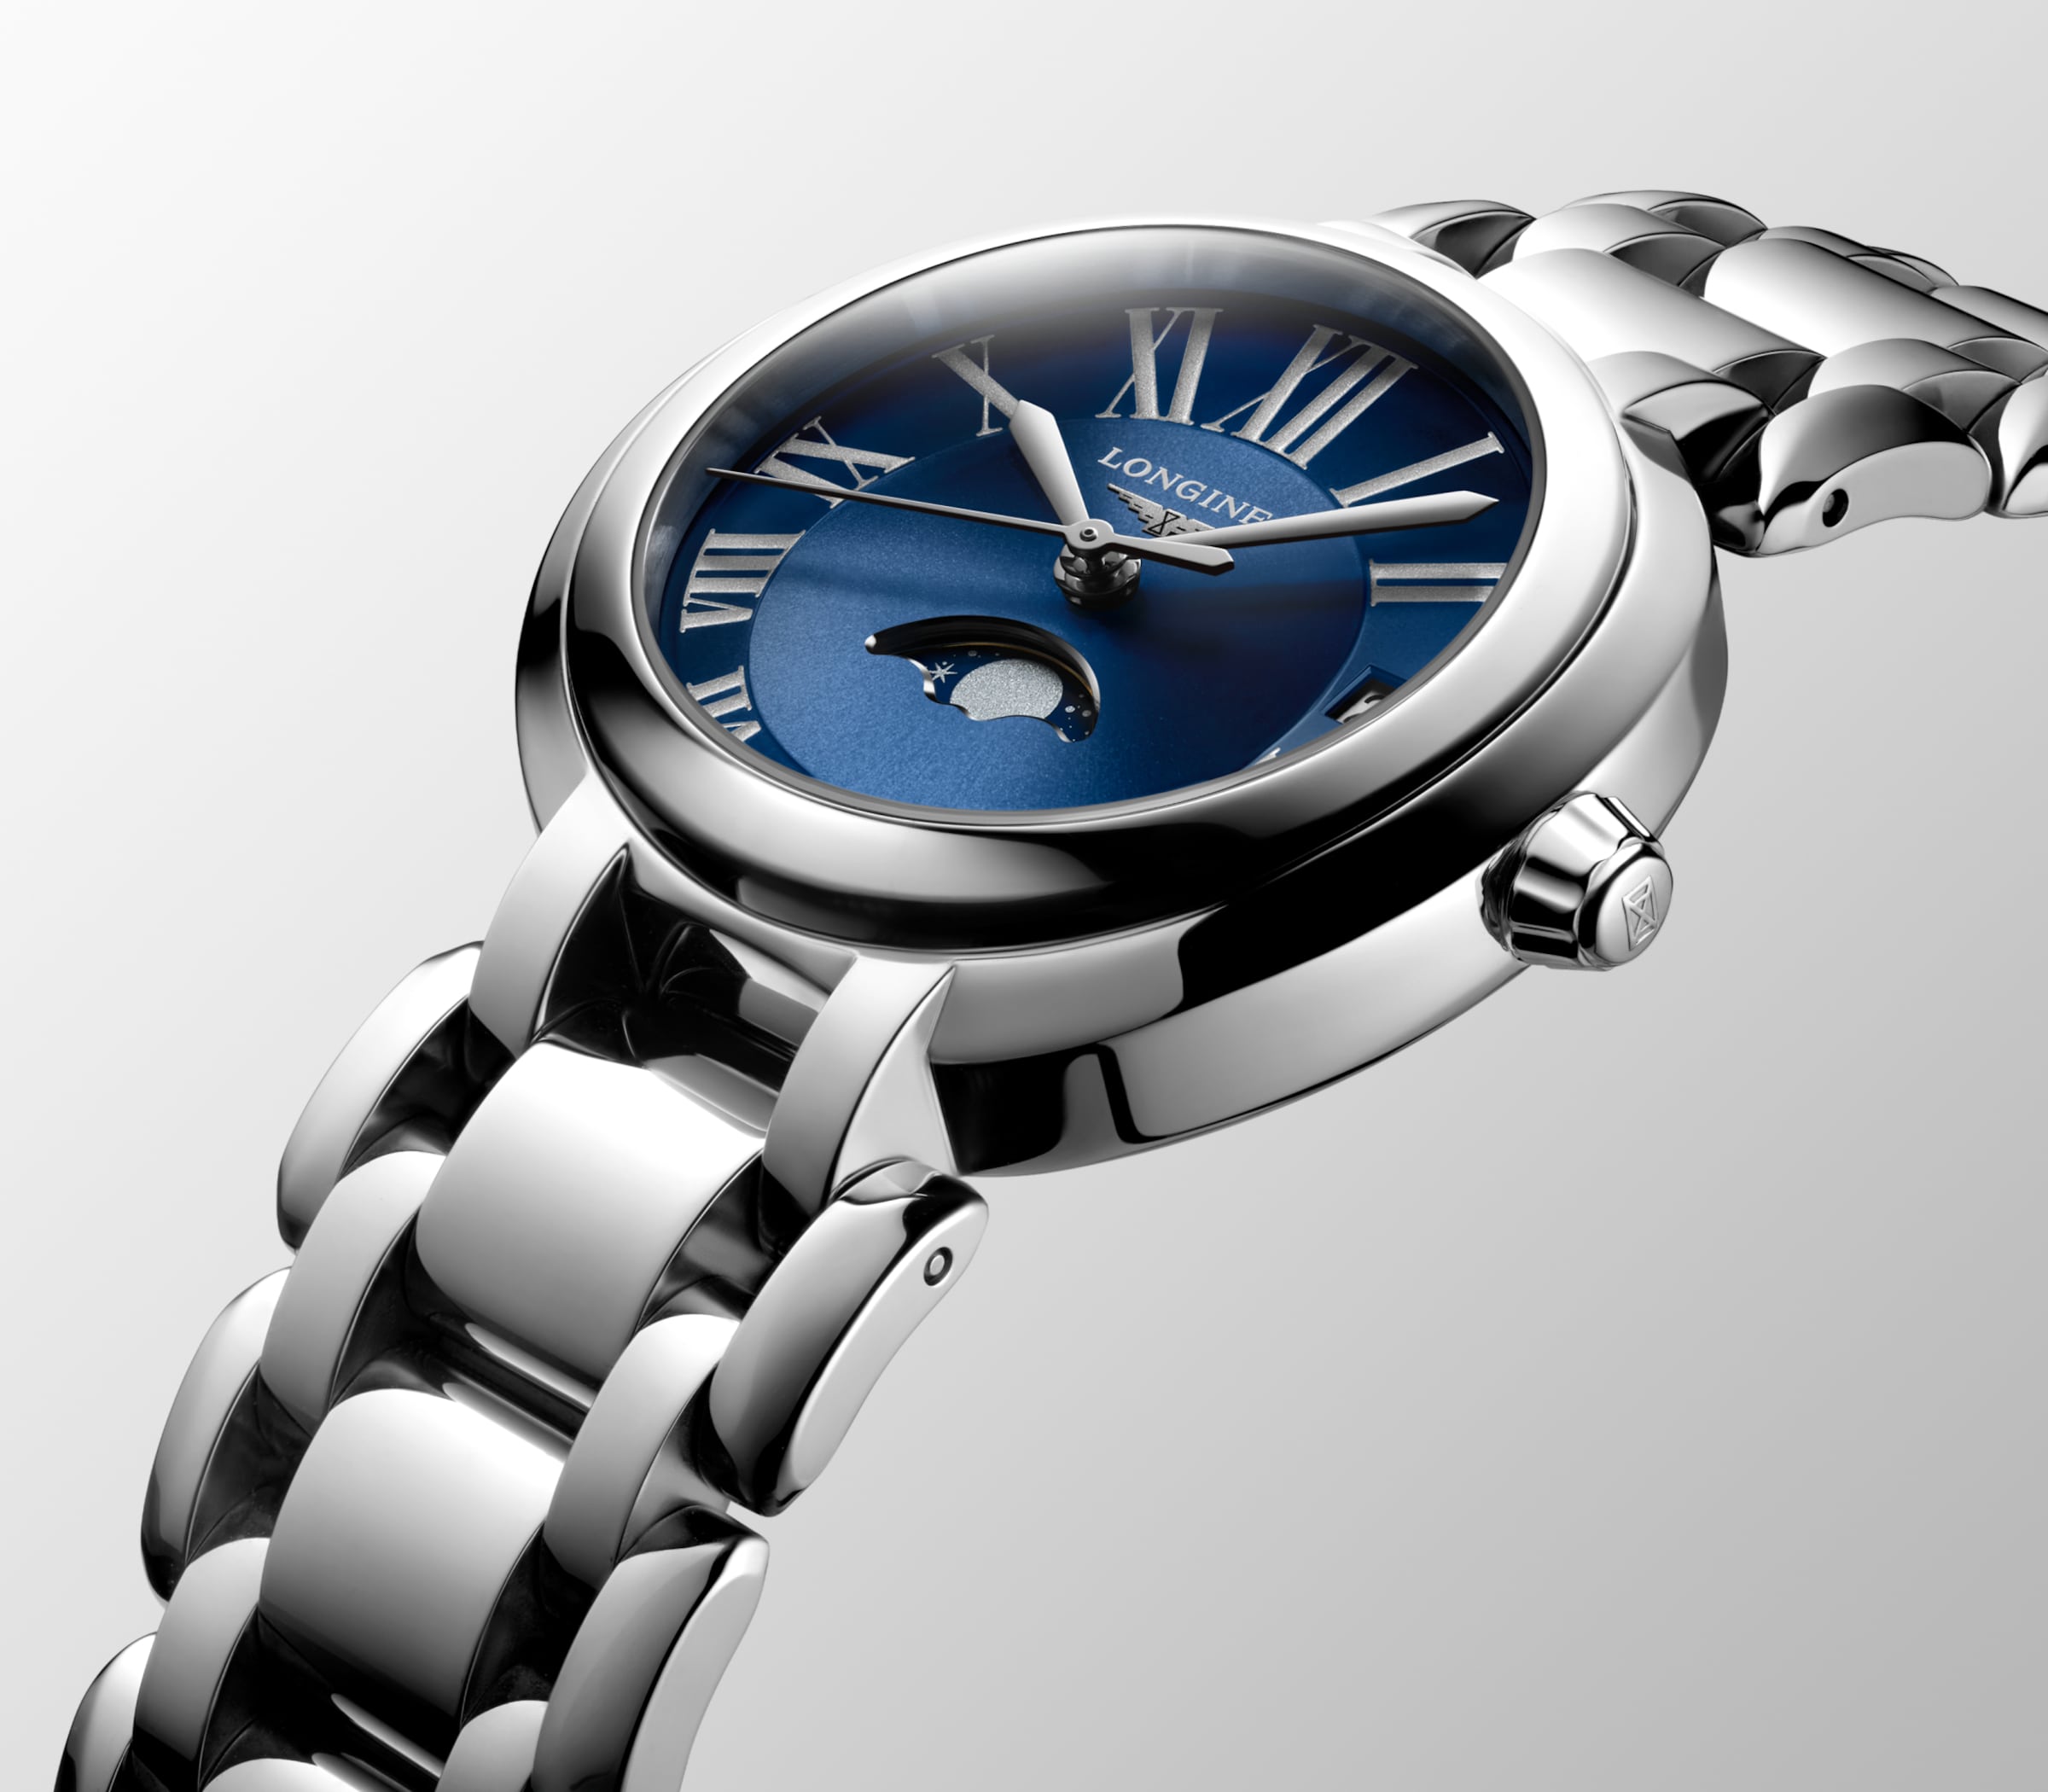 Longines PRIMALUNA Quartz Stainless steel Watch - L8.115.4.91.6